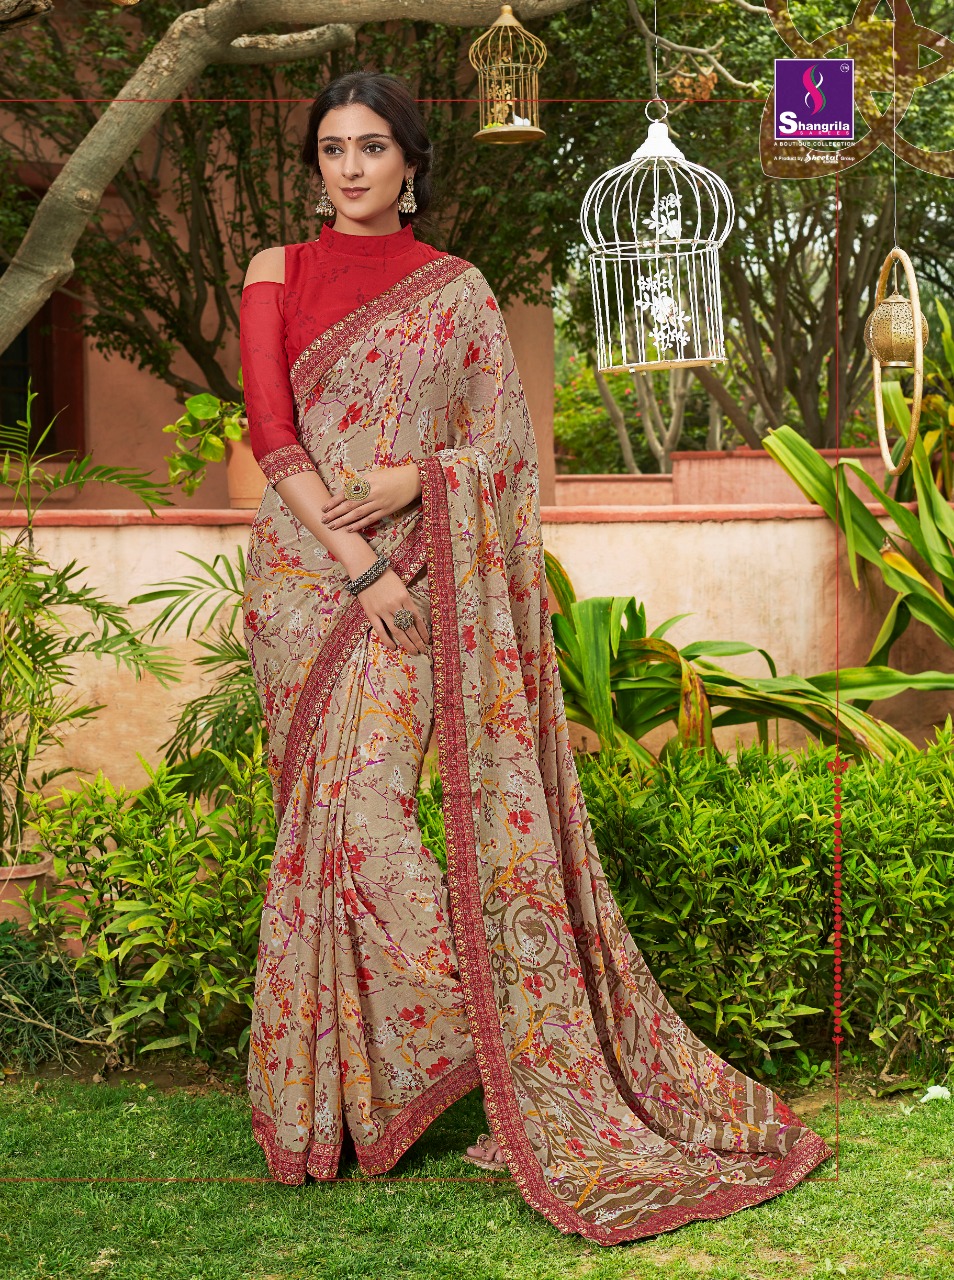 shangrila femina colorful casual wear sarees catalog